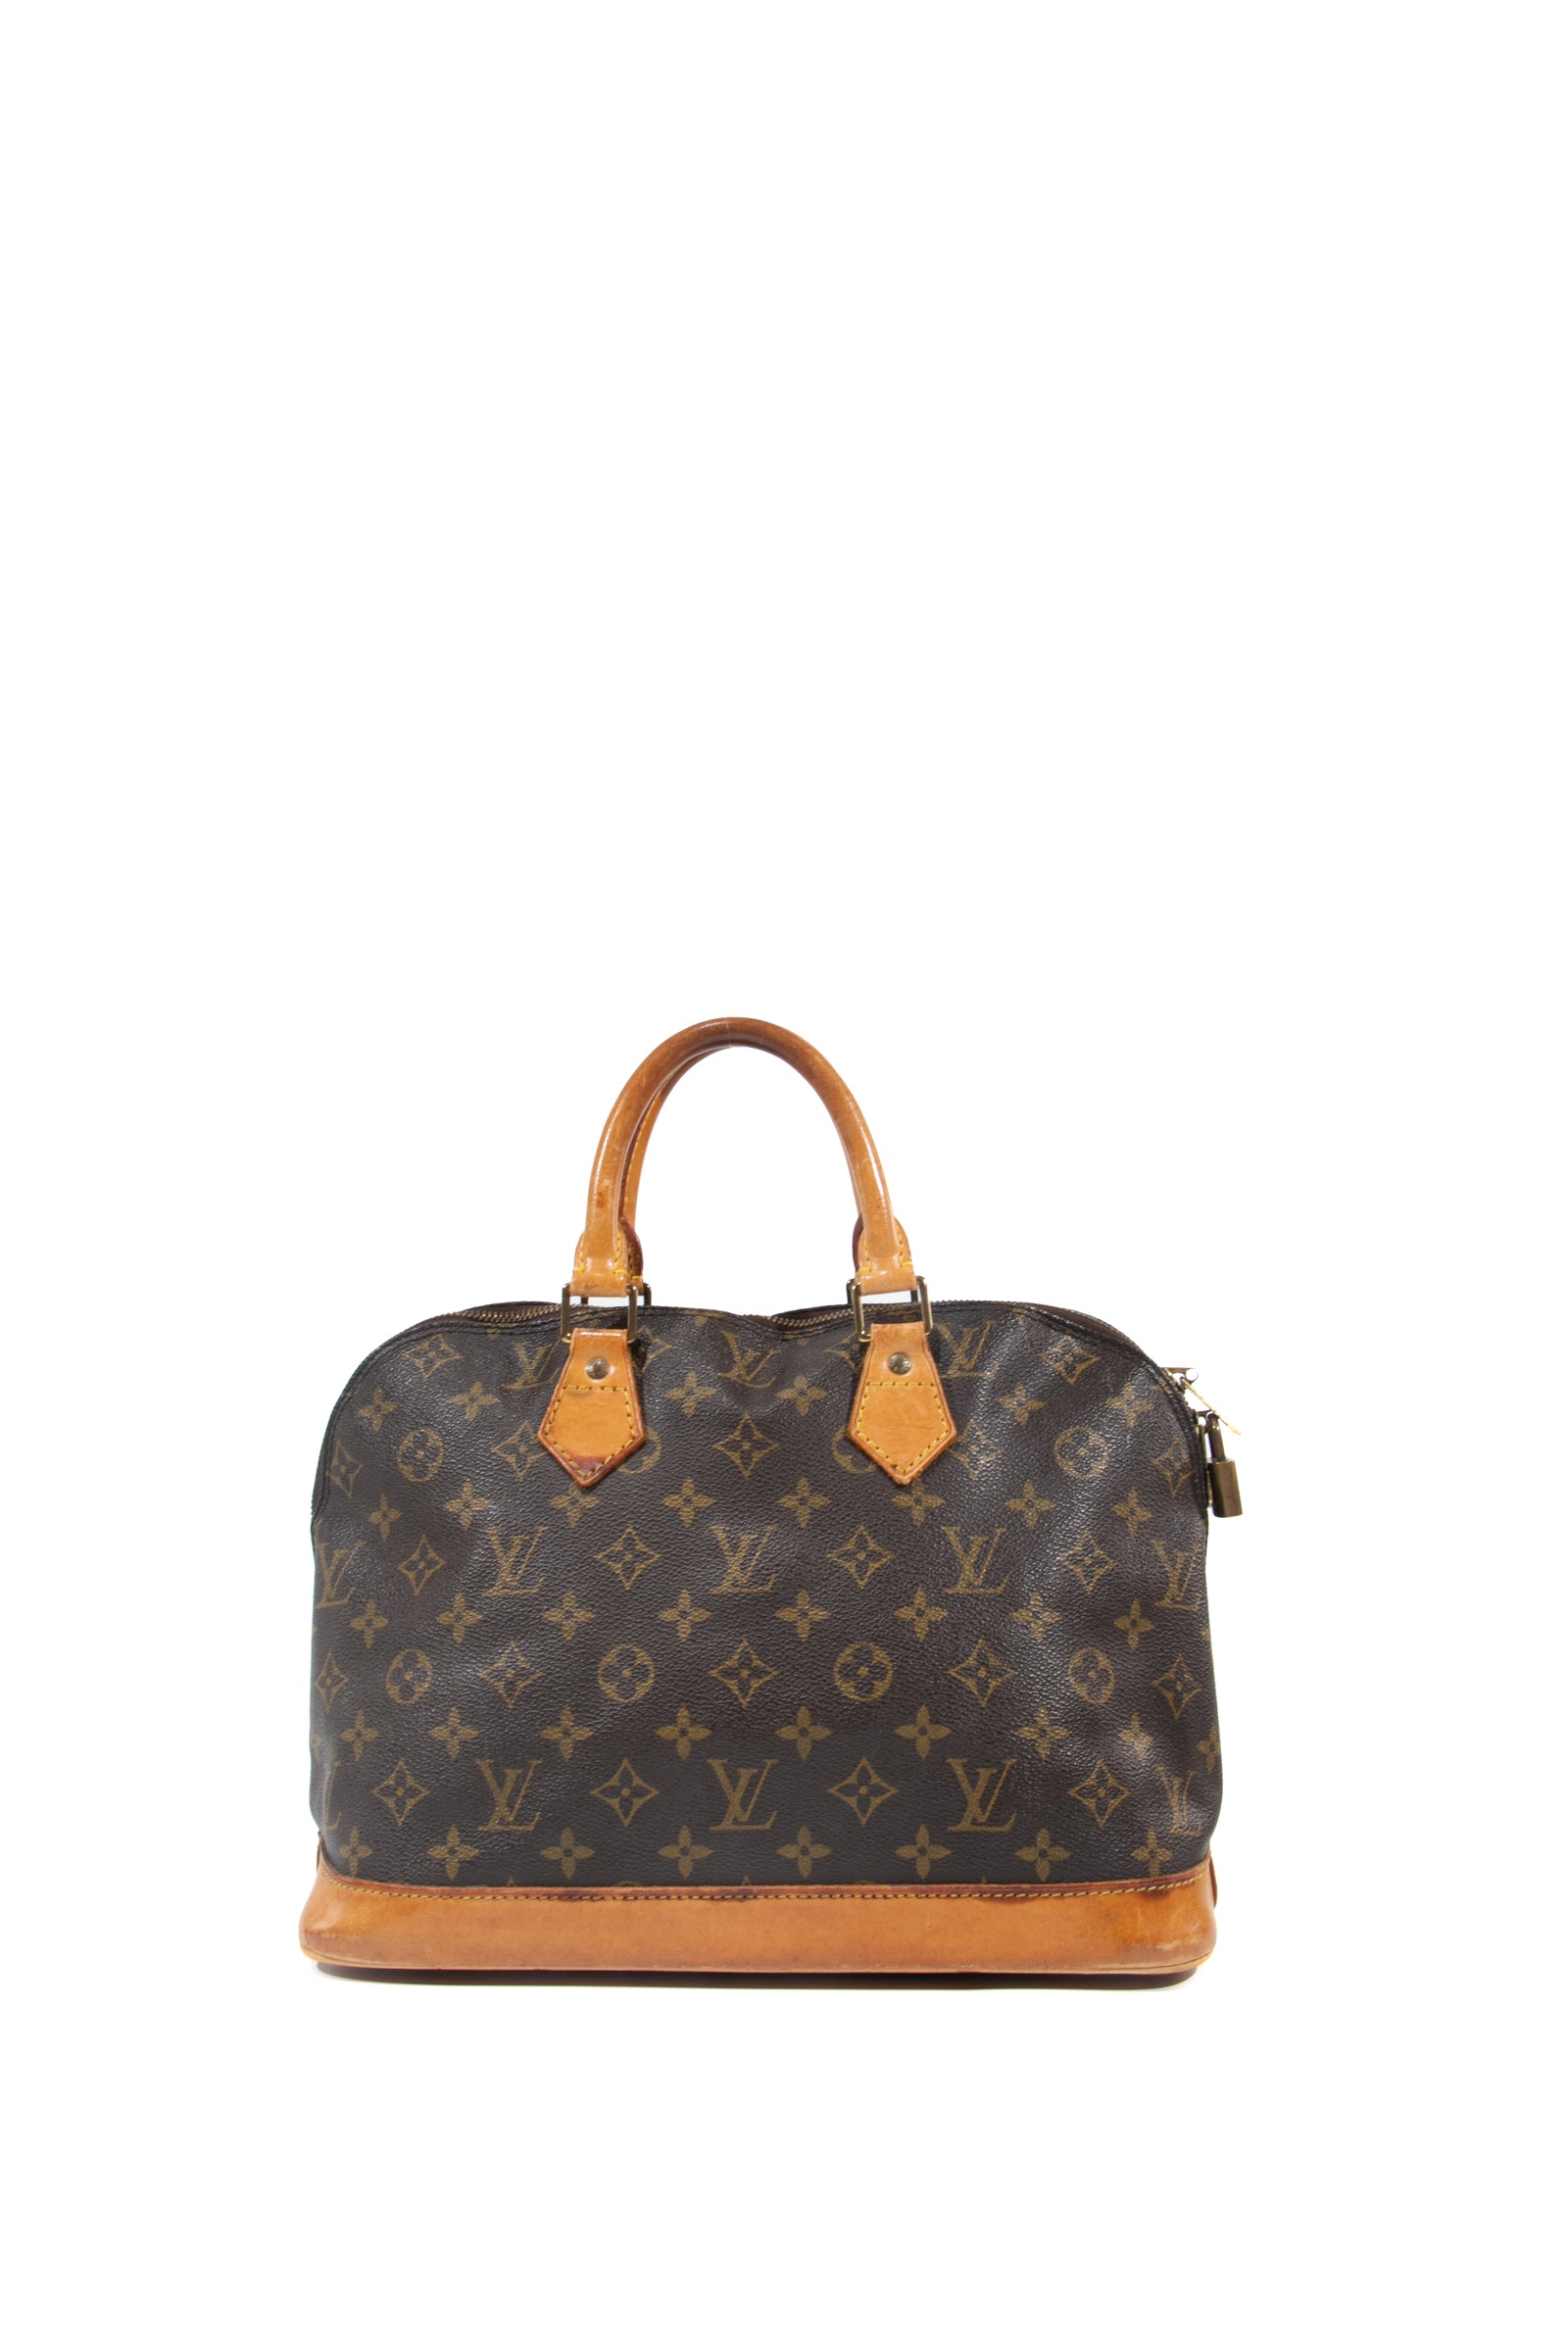 Shop Louis Vuitton, Speedy, Alma, Neverfull & Keepall Handbags